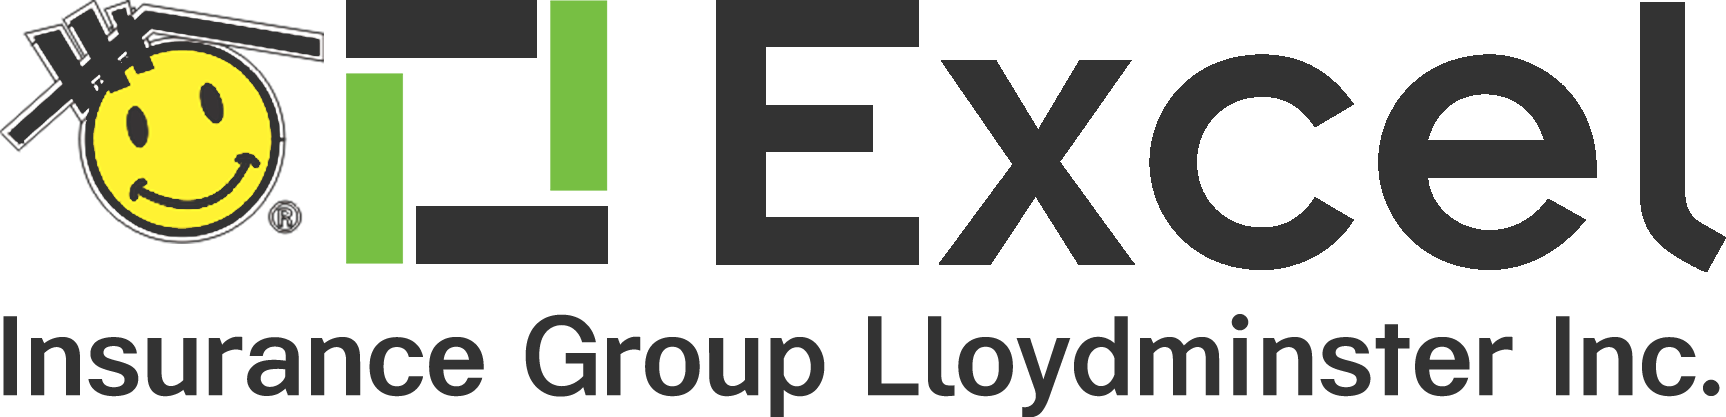 Excel Insurance Group Lloyminster Inc.